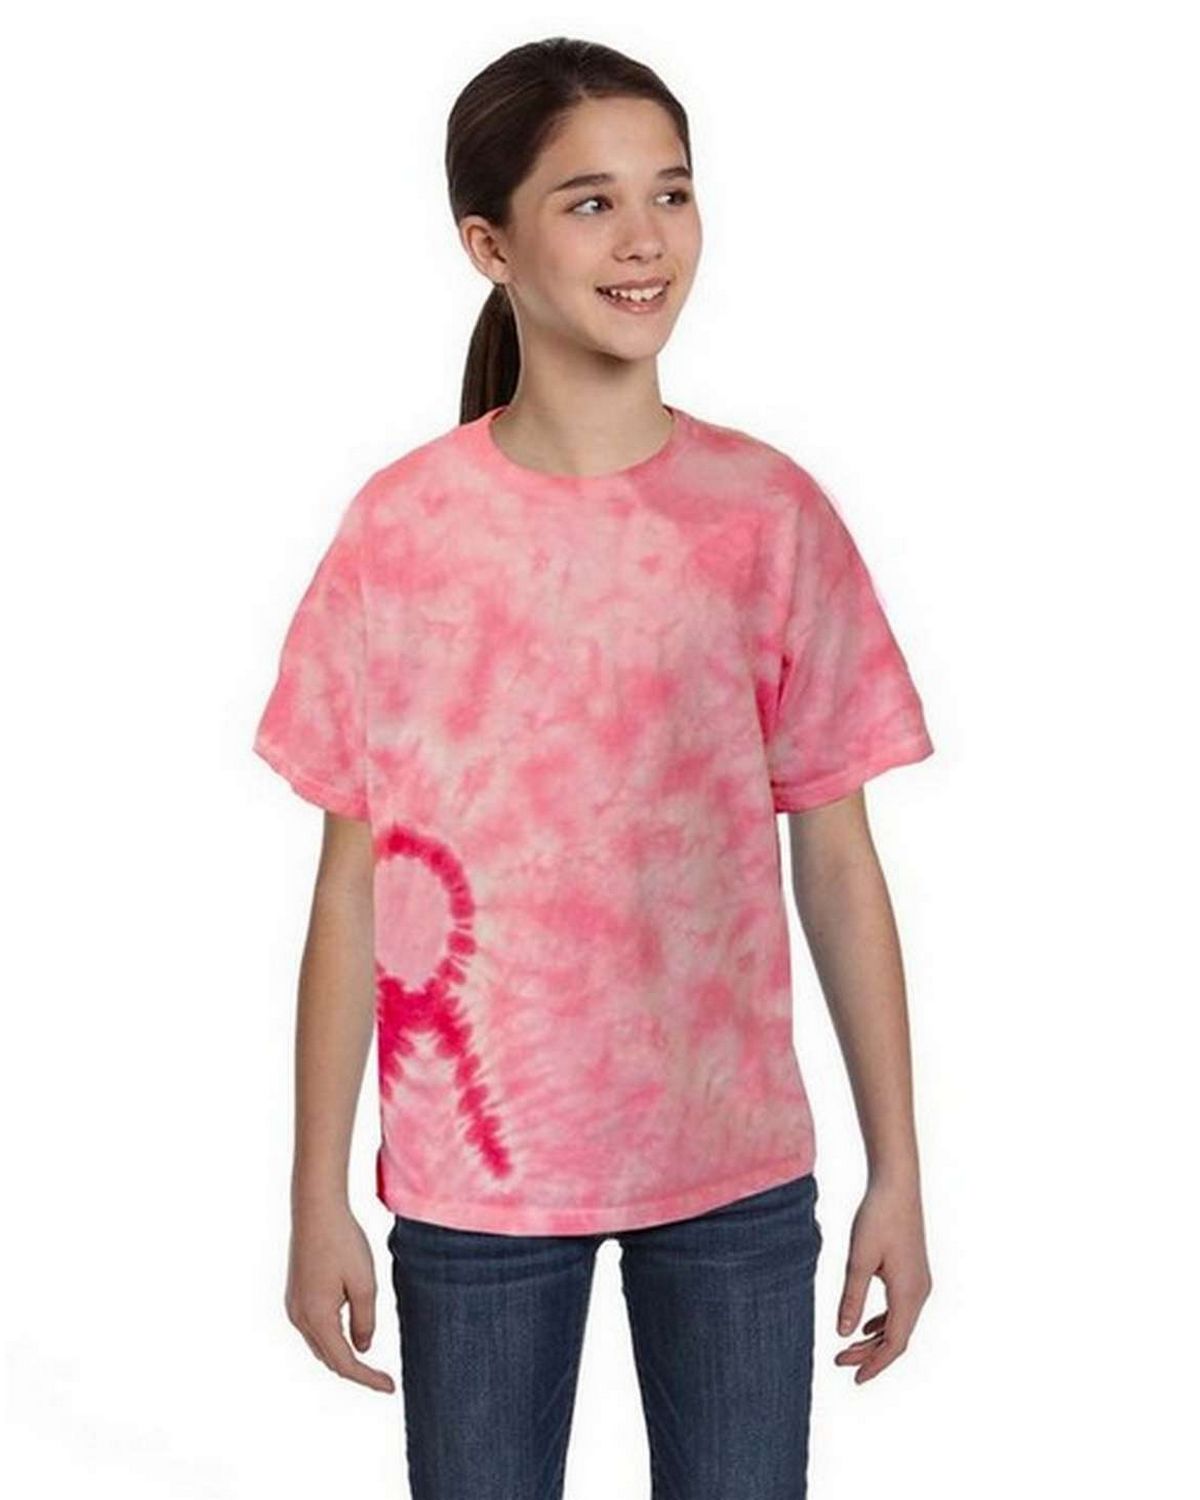 Tie-Dye CD1150Y Youth Pink Ribbon T Shirt - ApparelnBags.com